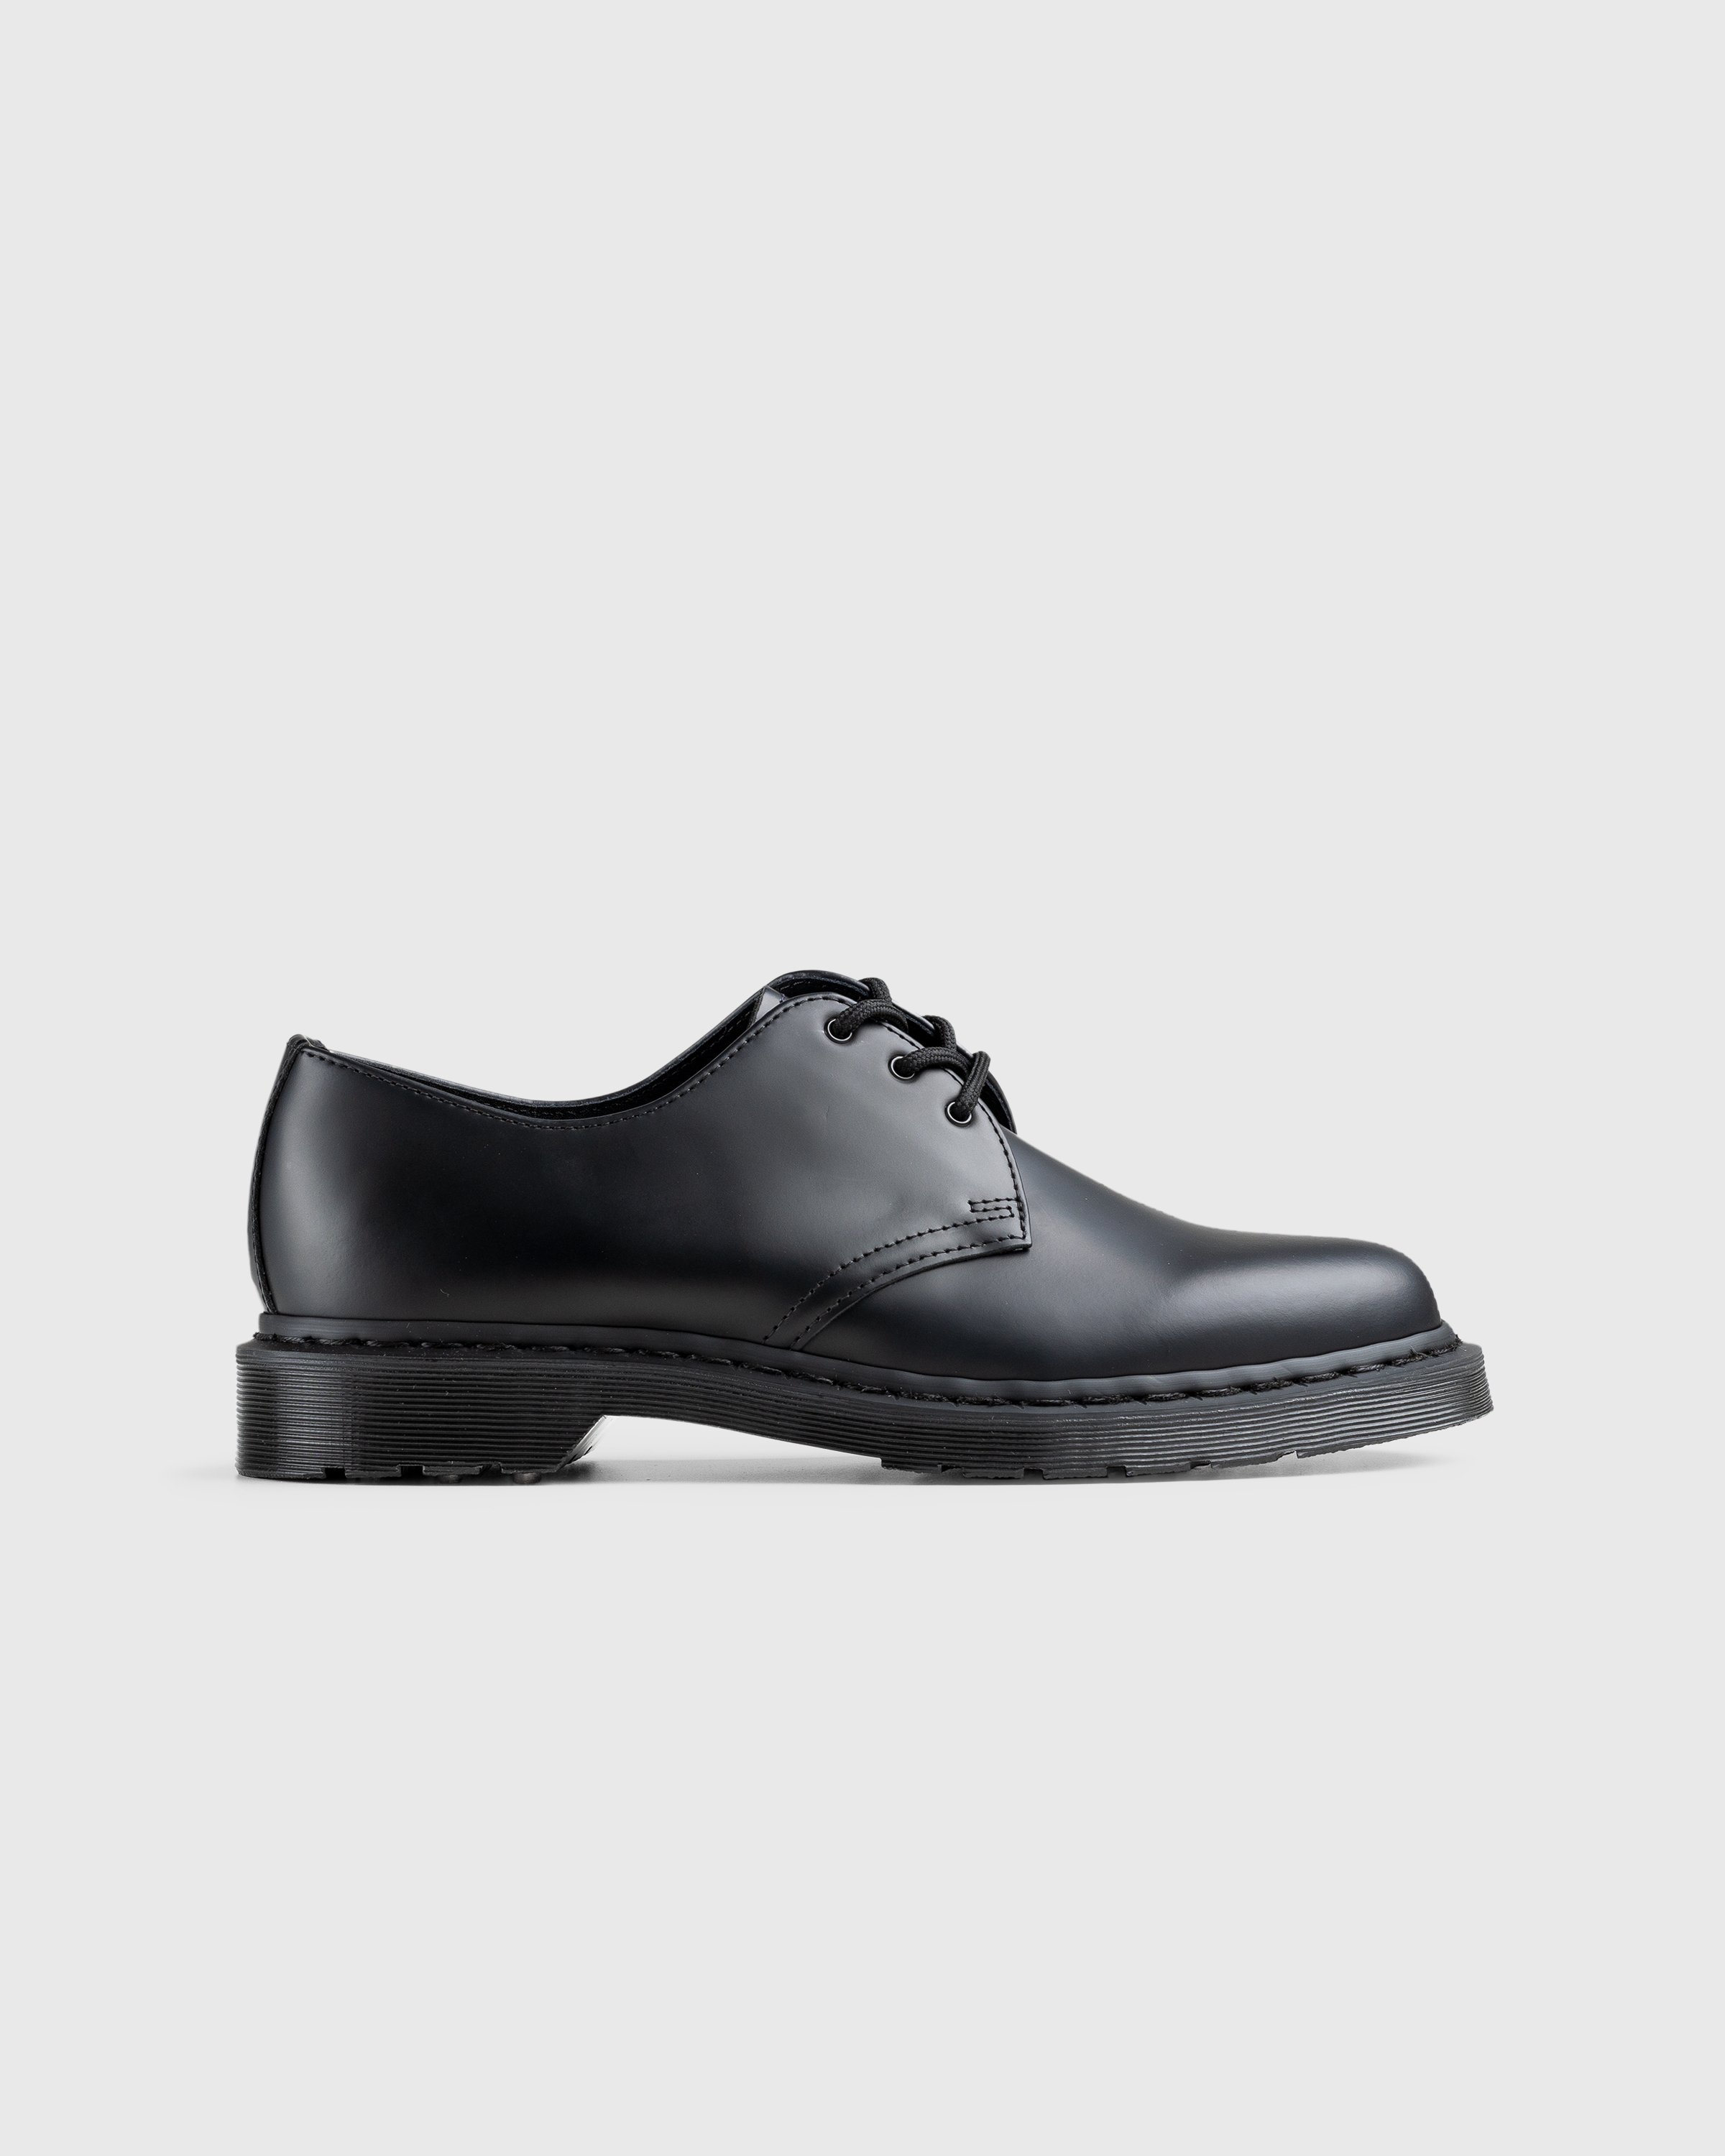 Dr. Martens - 1461 Mono Black Smooth - Footwear - Black - Image 1